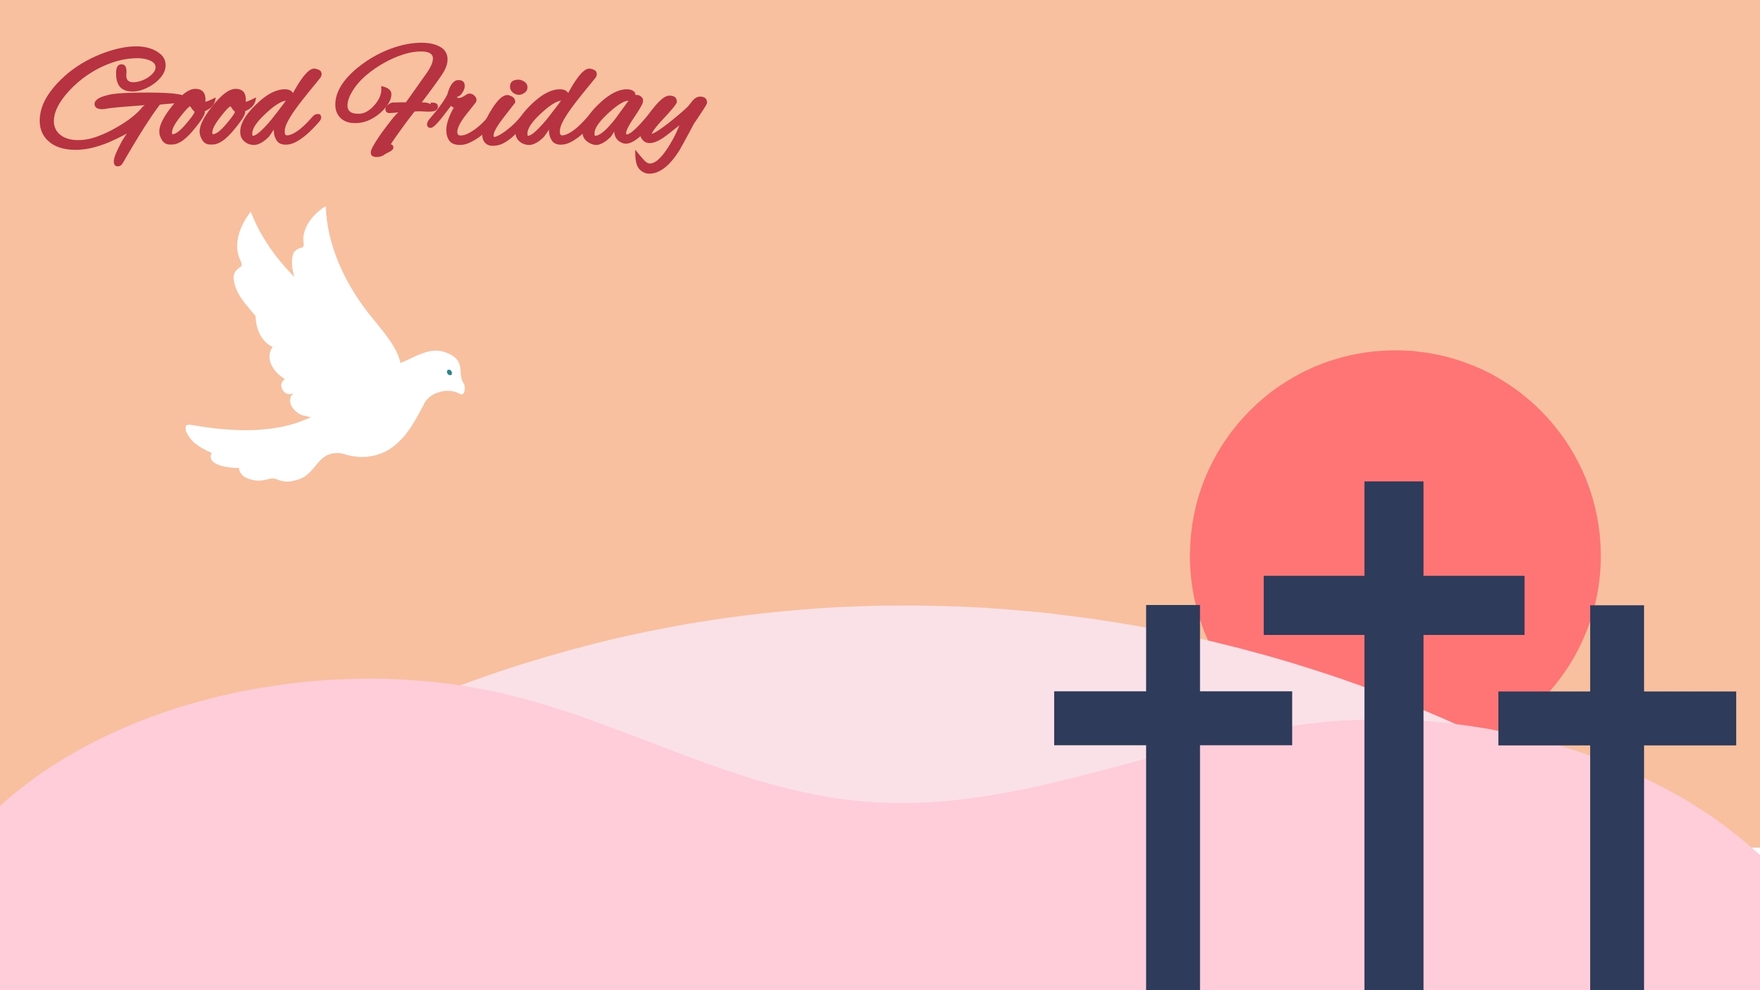 FREE Good Friday Background Image Download in PDF, Illustrator